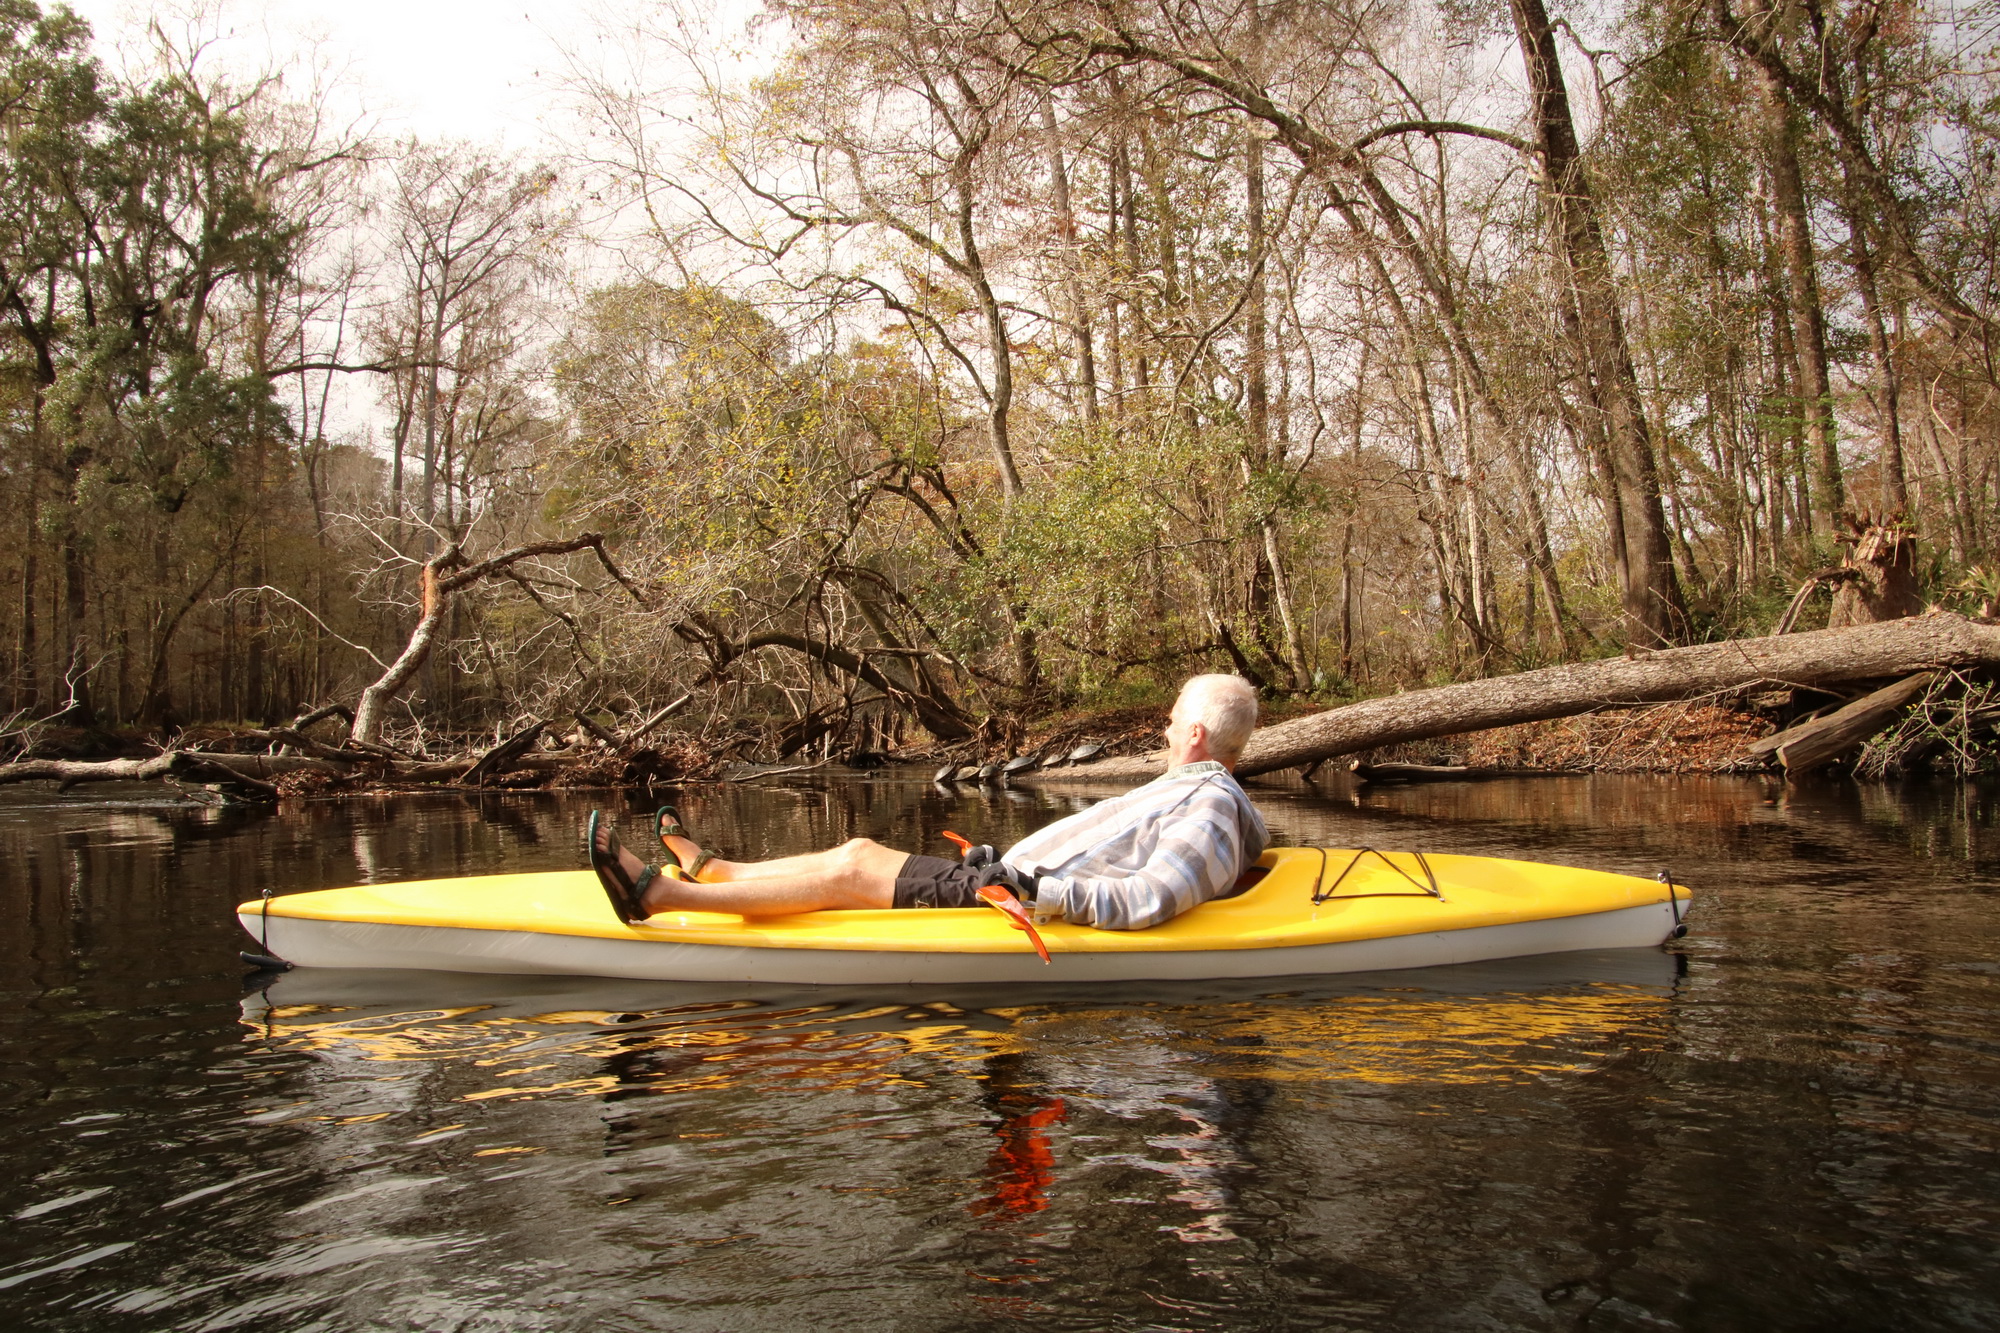 David Floating downstream